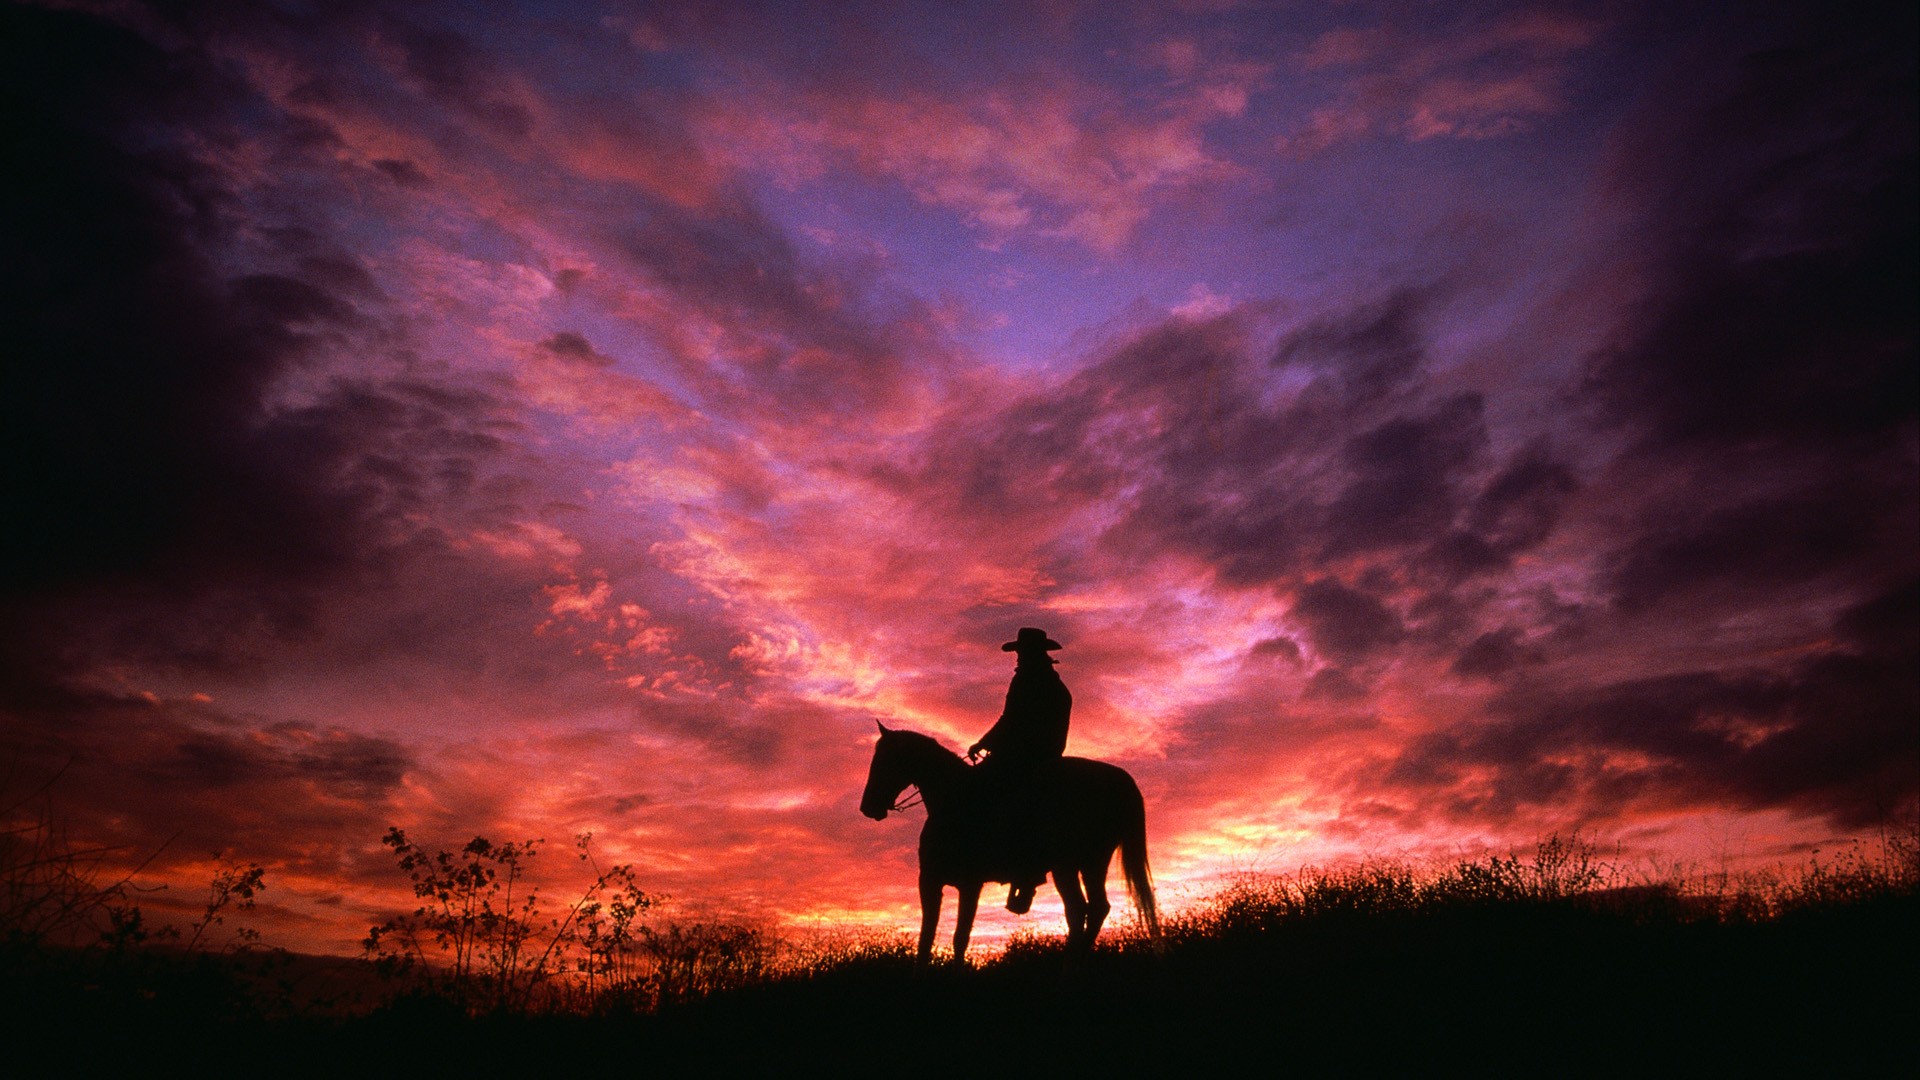 sunset, cowboys - desktop wallpaper